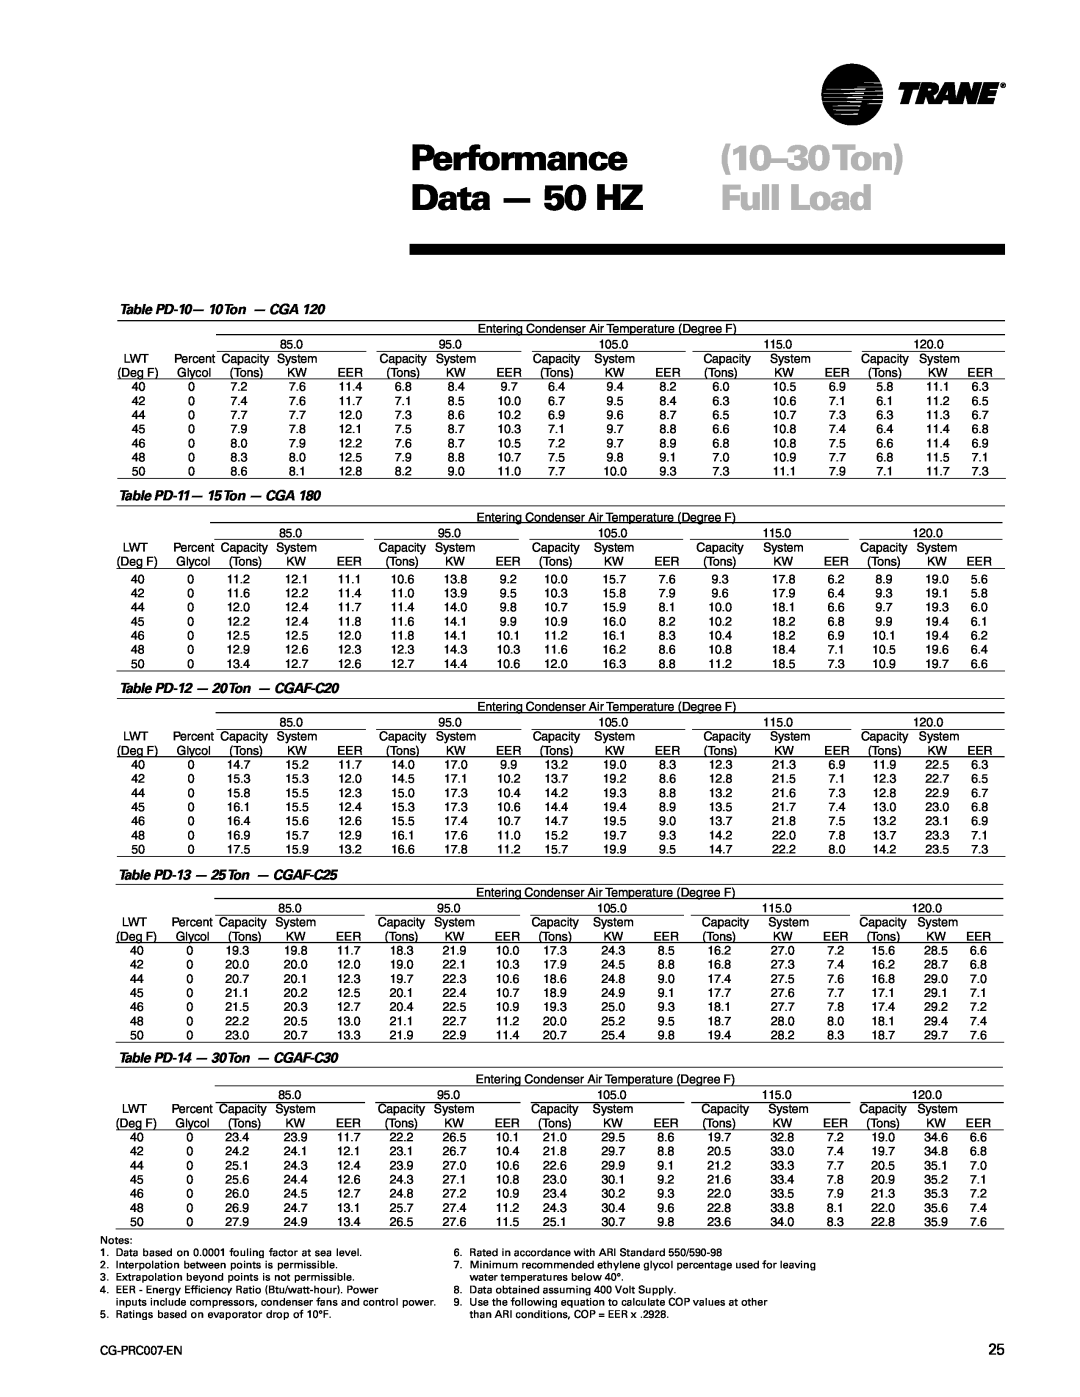 Trane CG-PRC007-EN manual 10-30Ton, Data - 50 HZ, Performance, Full Load, Table PD-10-10Ton - CGA, Table PD-11-15Ton - CGA 